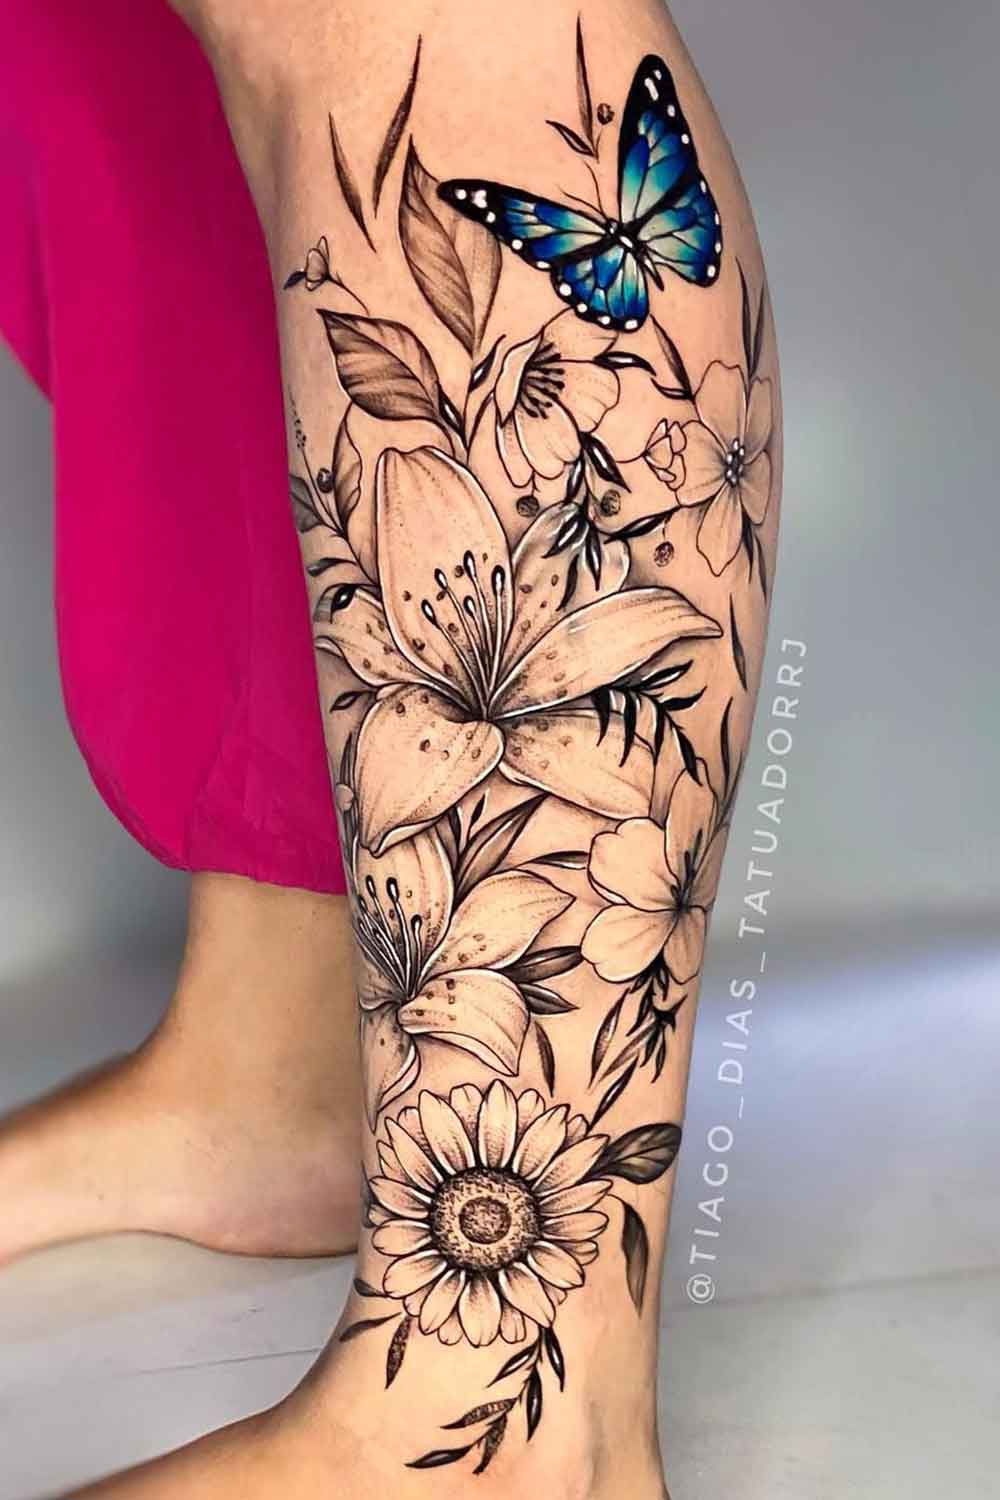 tatuagem-floral-com-borboleta-na-perna 